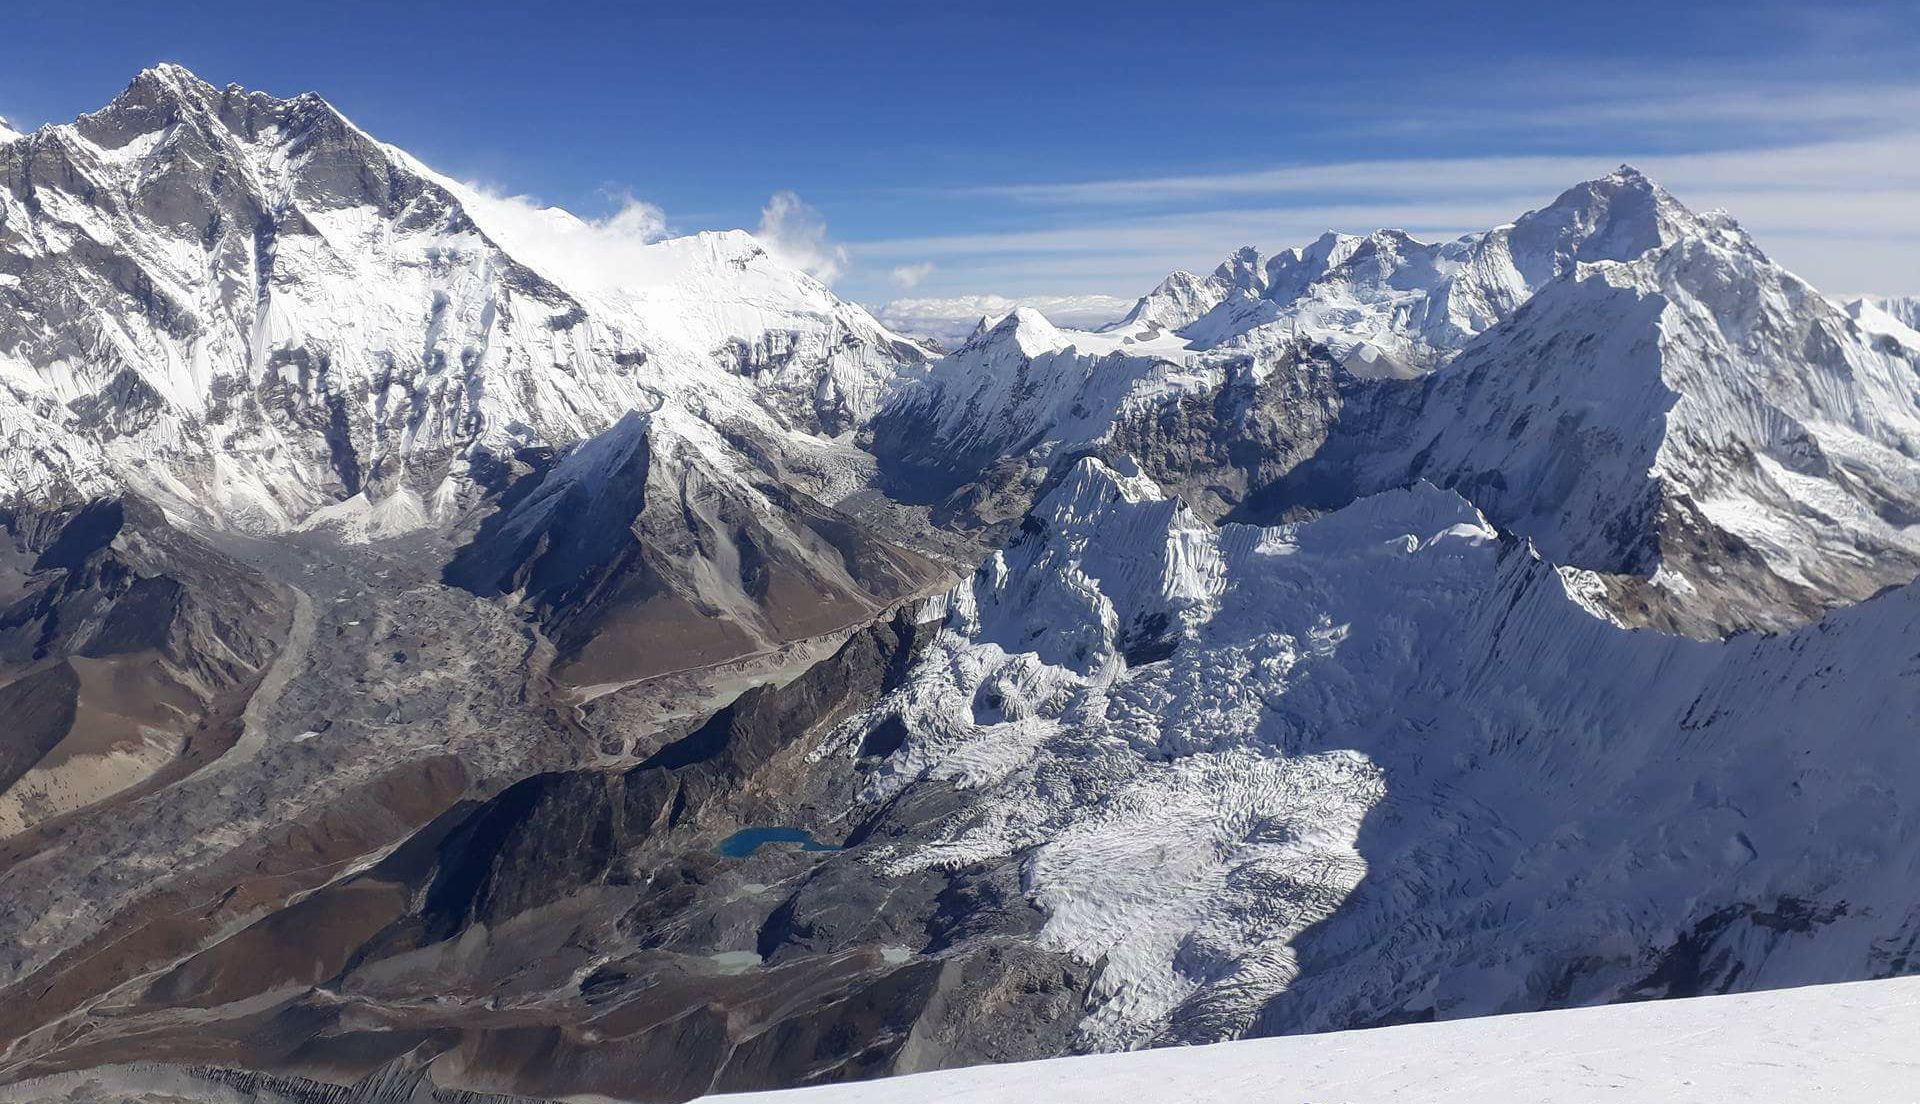 Upper Chukhung Valley beneath Lhotse, Makalu and Baruntse